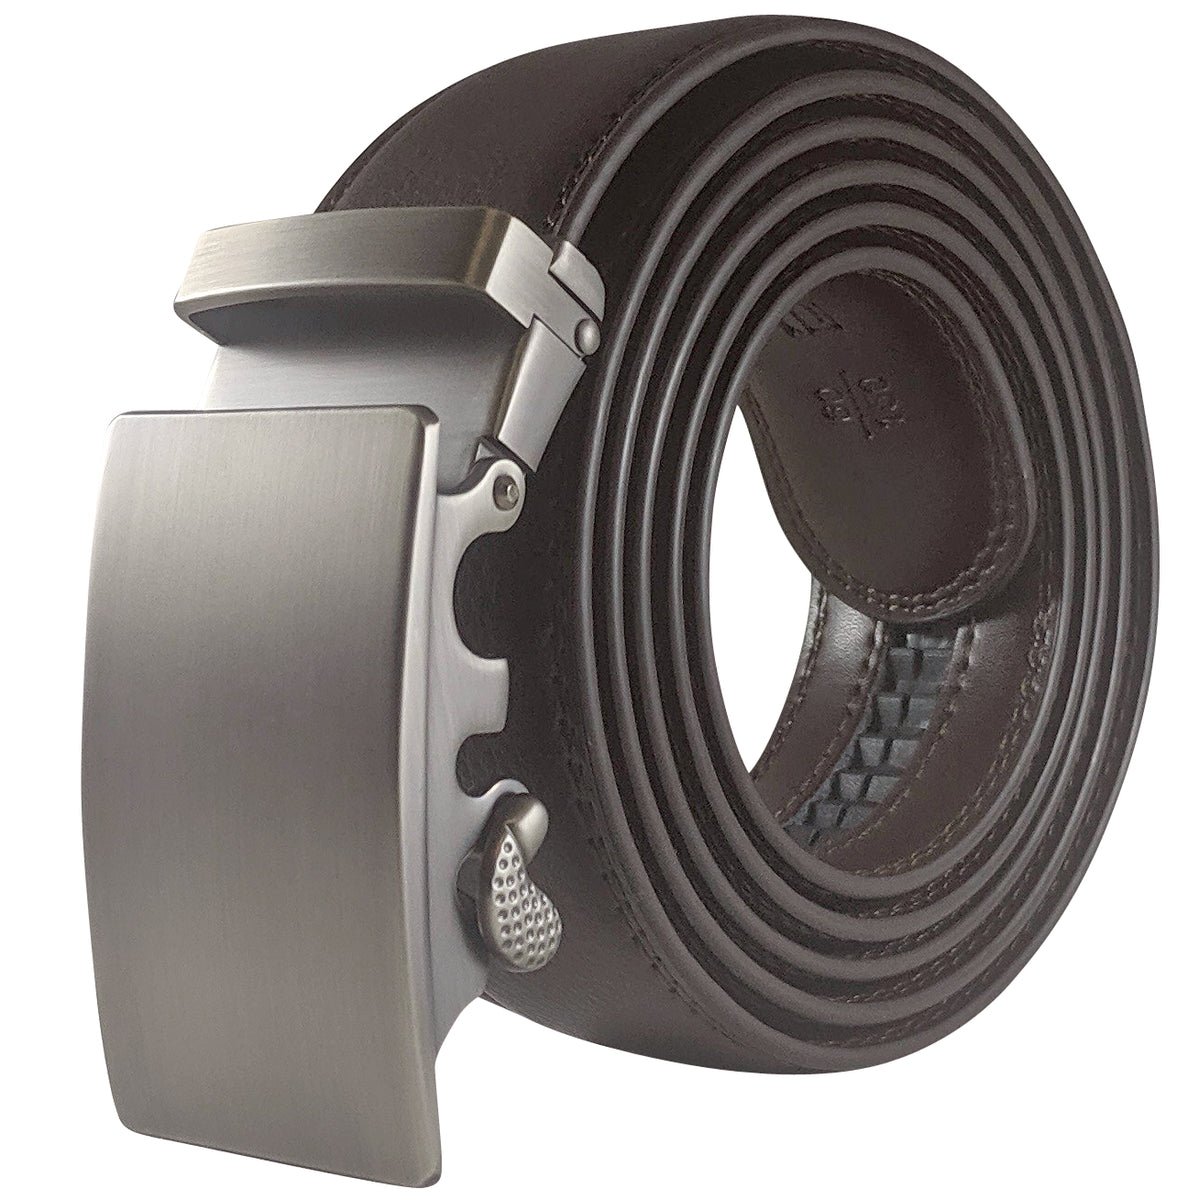 Men's Comfort Genuine Leather Ratchet Dress Belt 1 1/8 Wide with